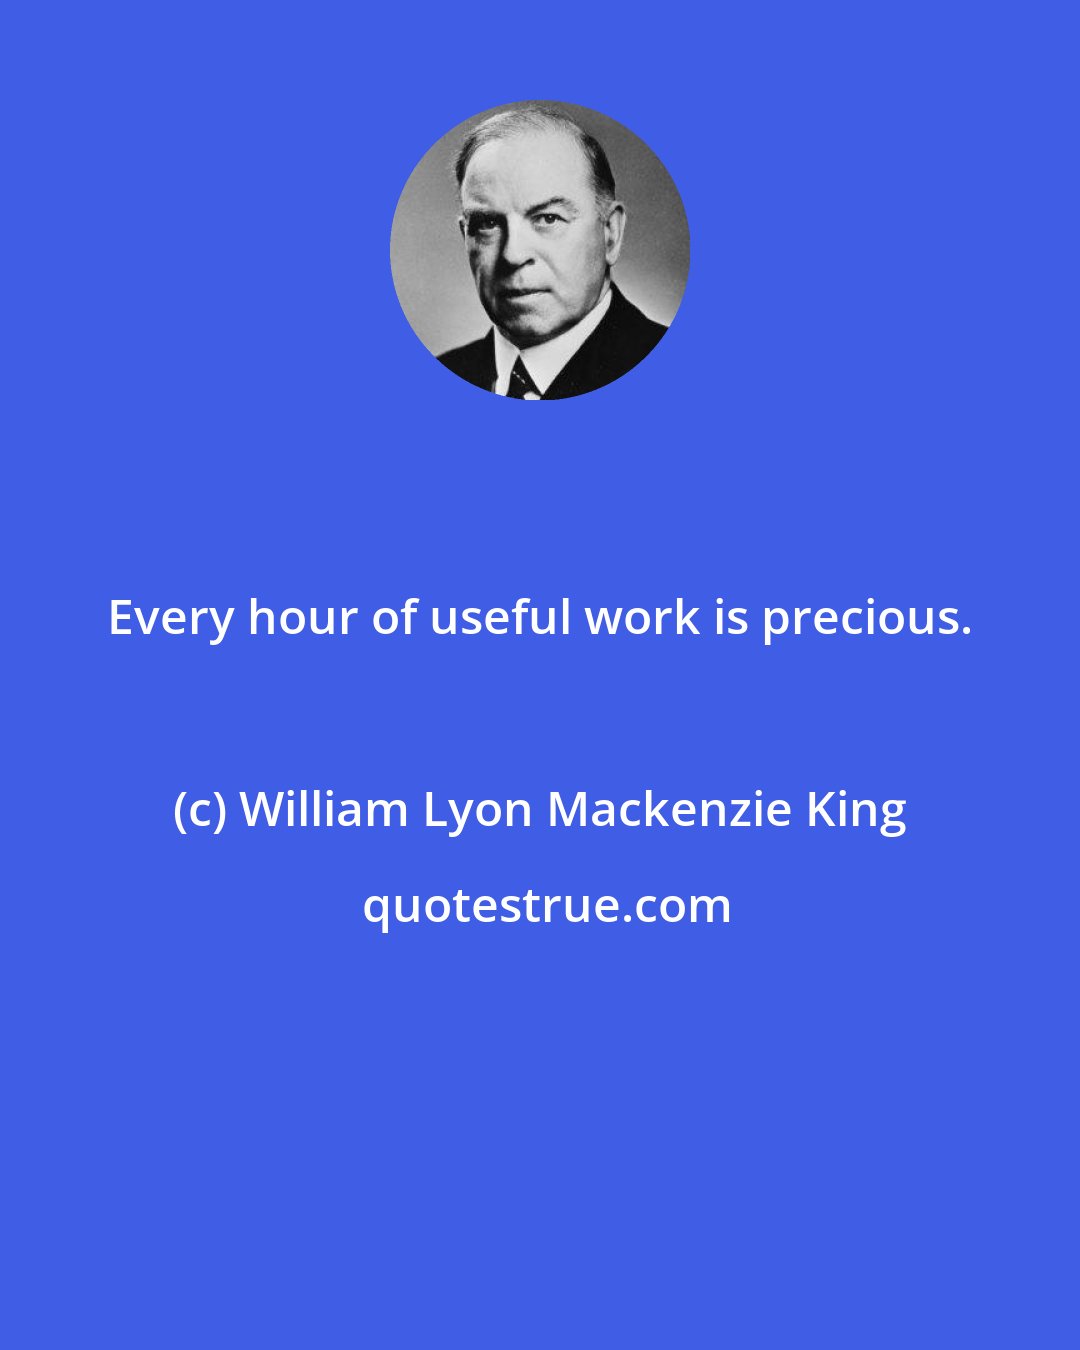 William Lyon Mackenzie King: Every hour of useful work is precious.